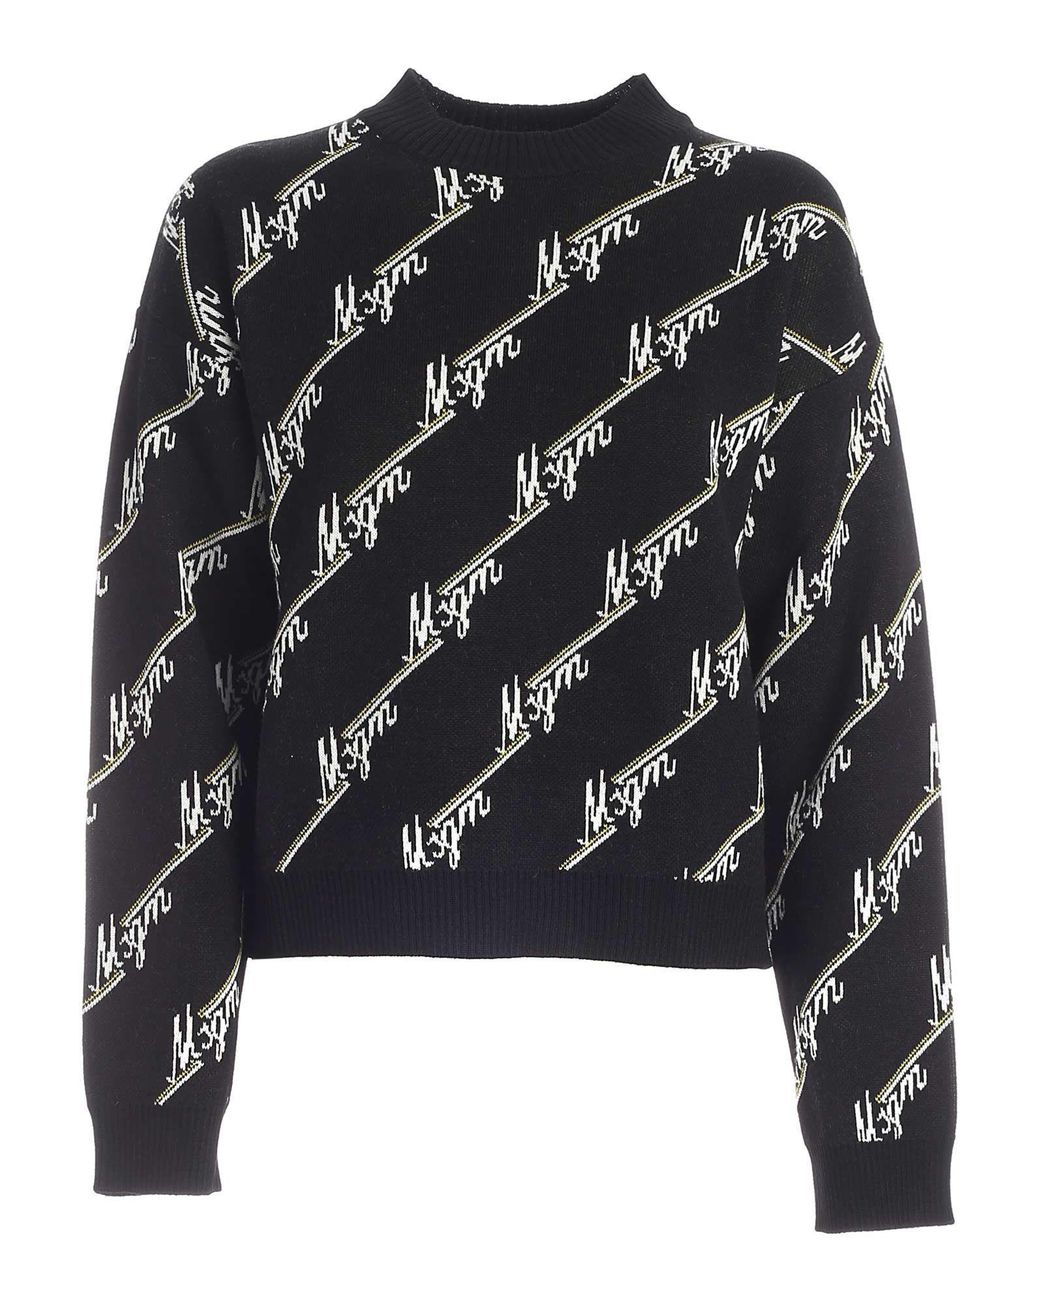 MSGM Wool Sweater in Black - Lyst